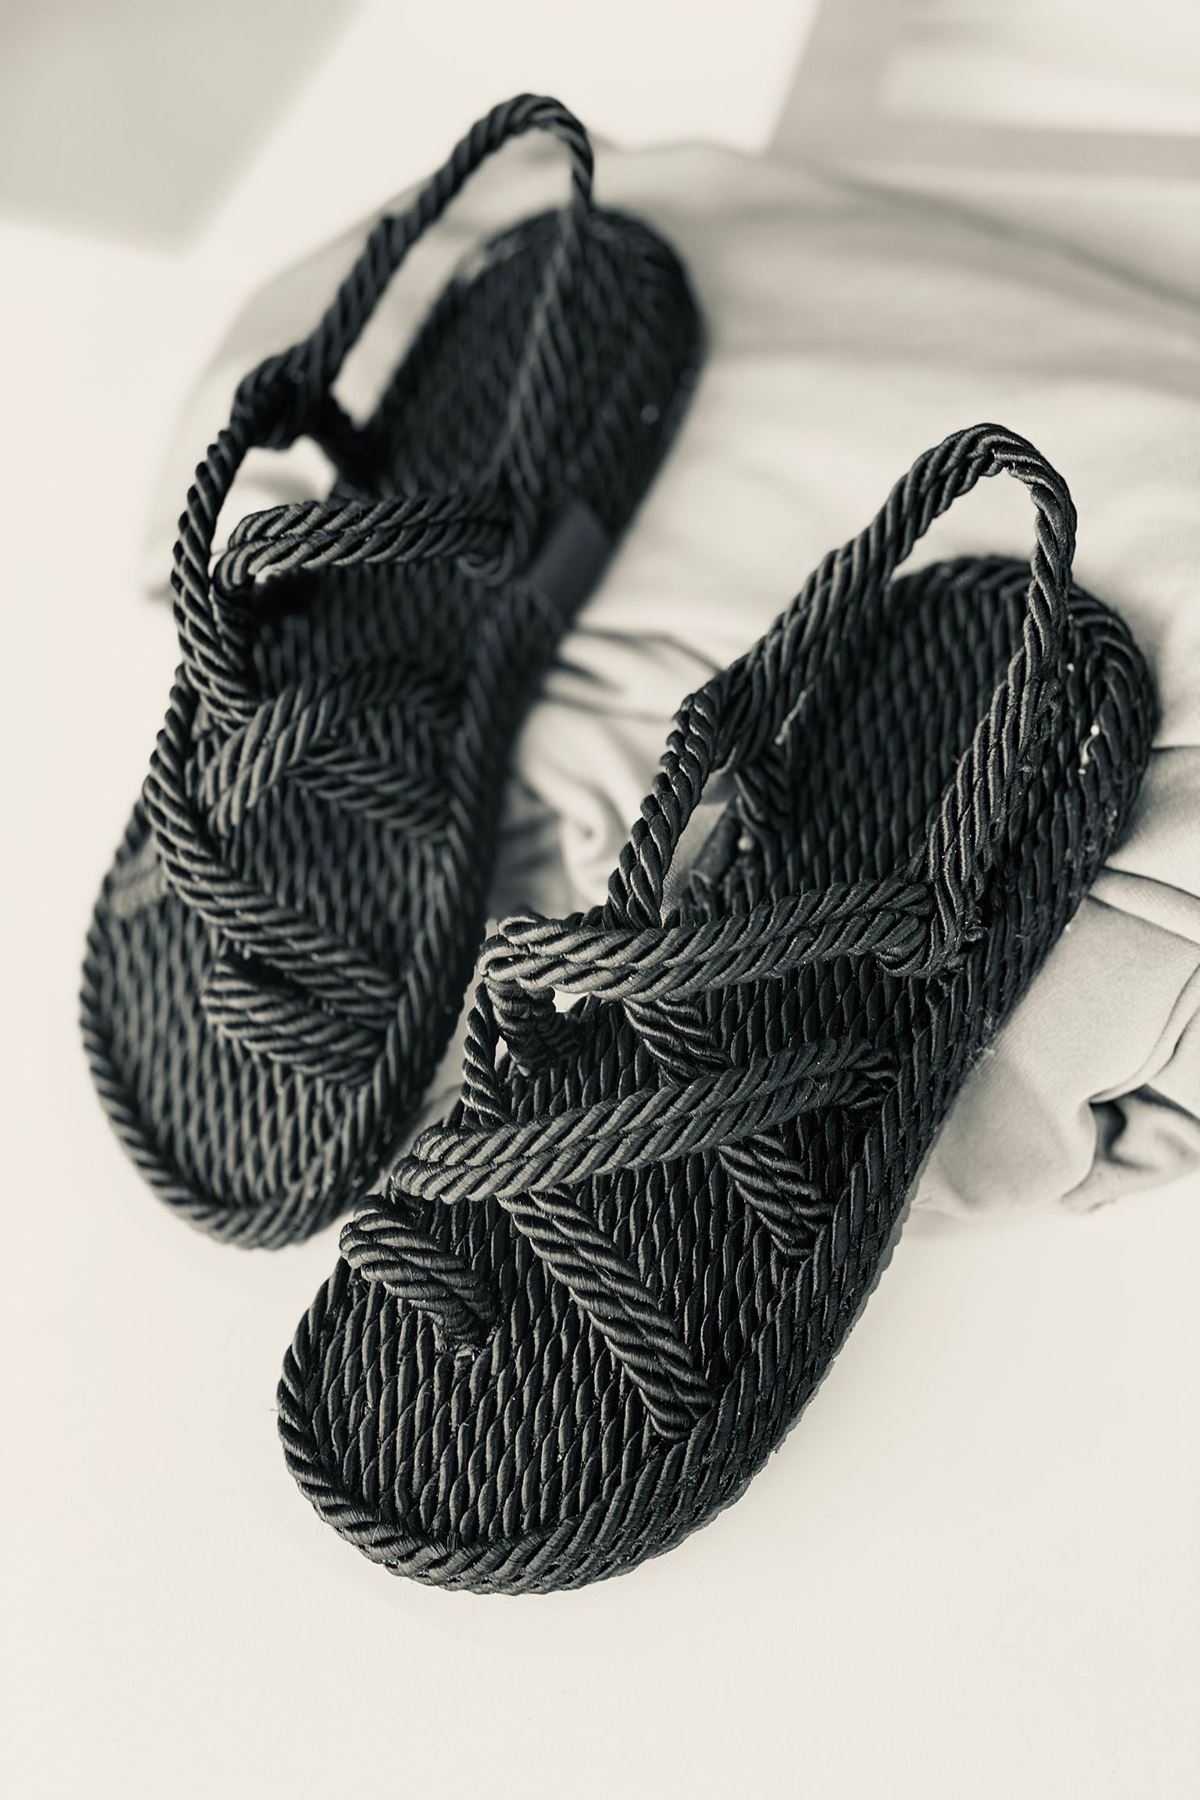 Mida Shoes YRPH01 Siyah Halat Sandalet